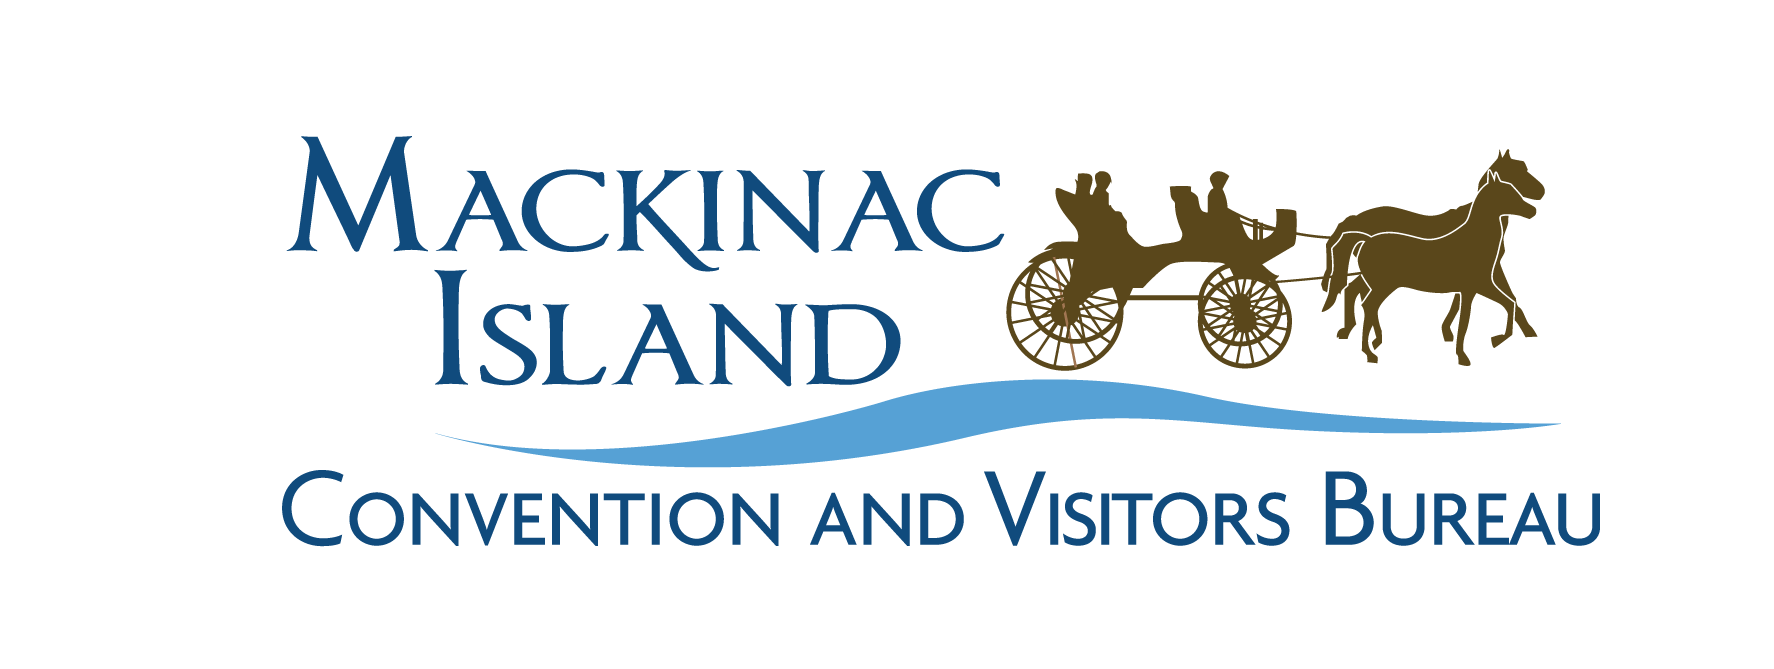 mackinac-logo.png